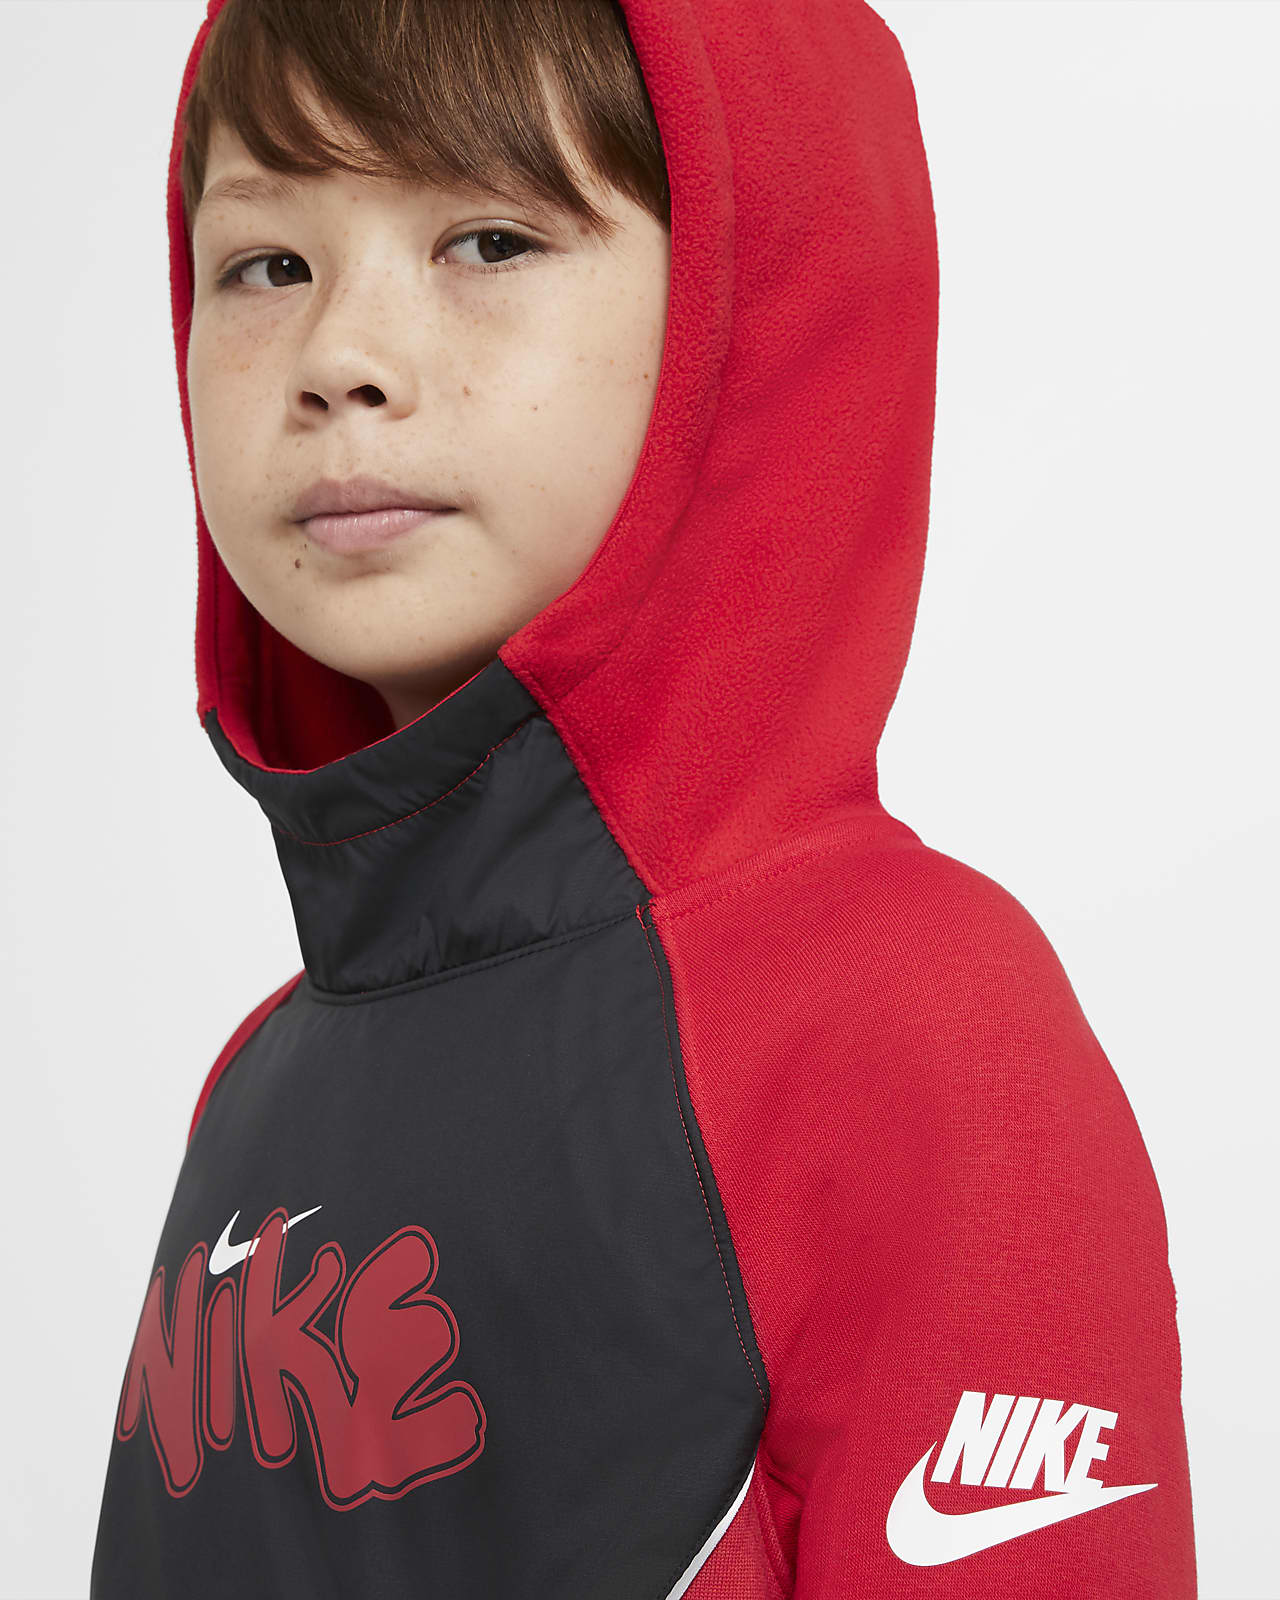 Nike公式 ナイキ スポーツウェア クラブ フリース ジュニア ボーイズ プルオーバー パーカー オンラインストア 通販サイト